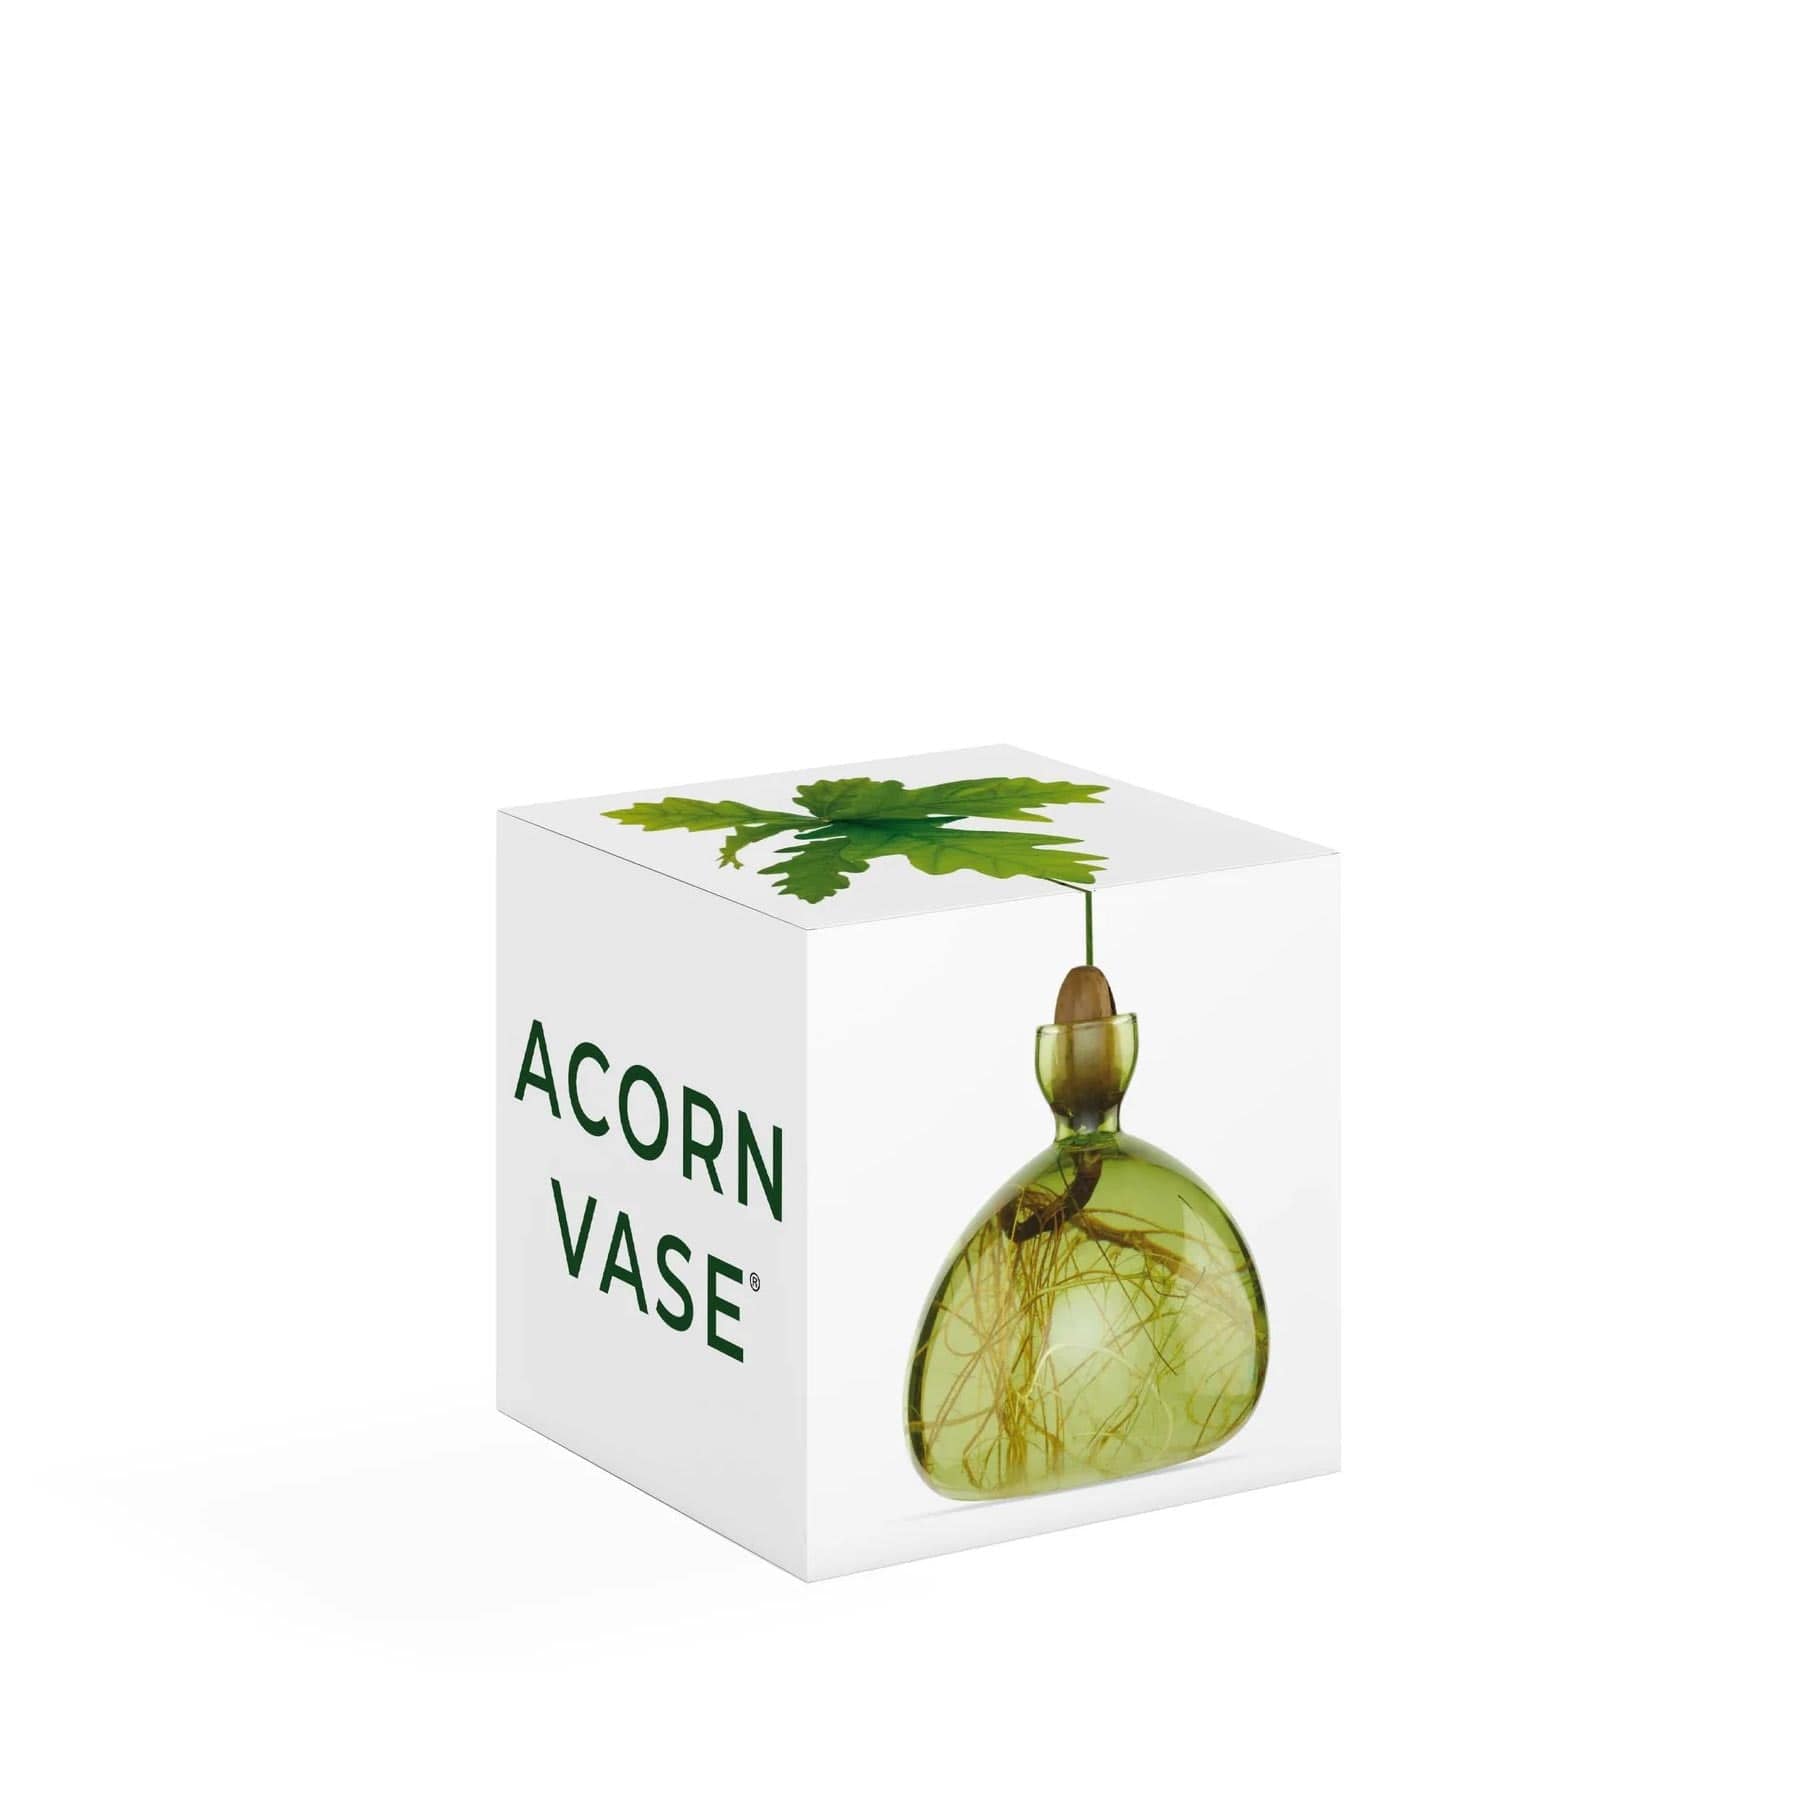 Acorn vase grass green